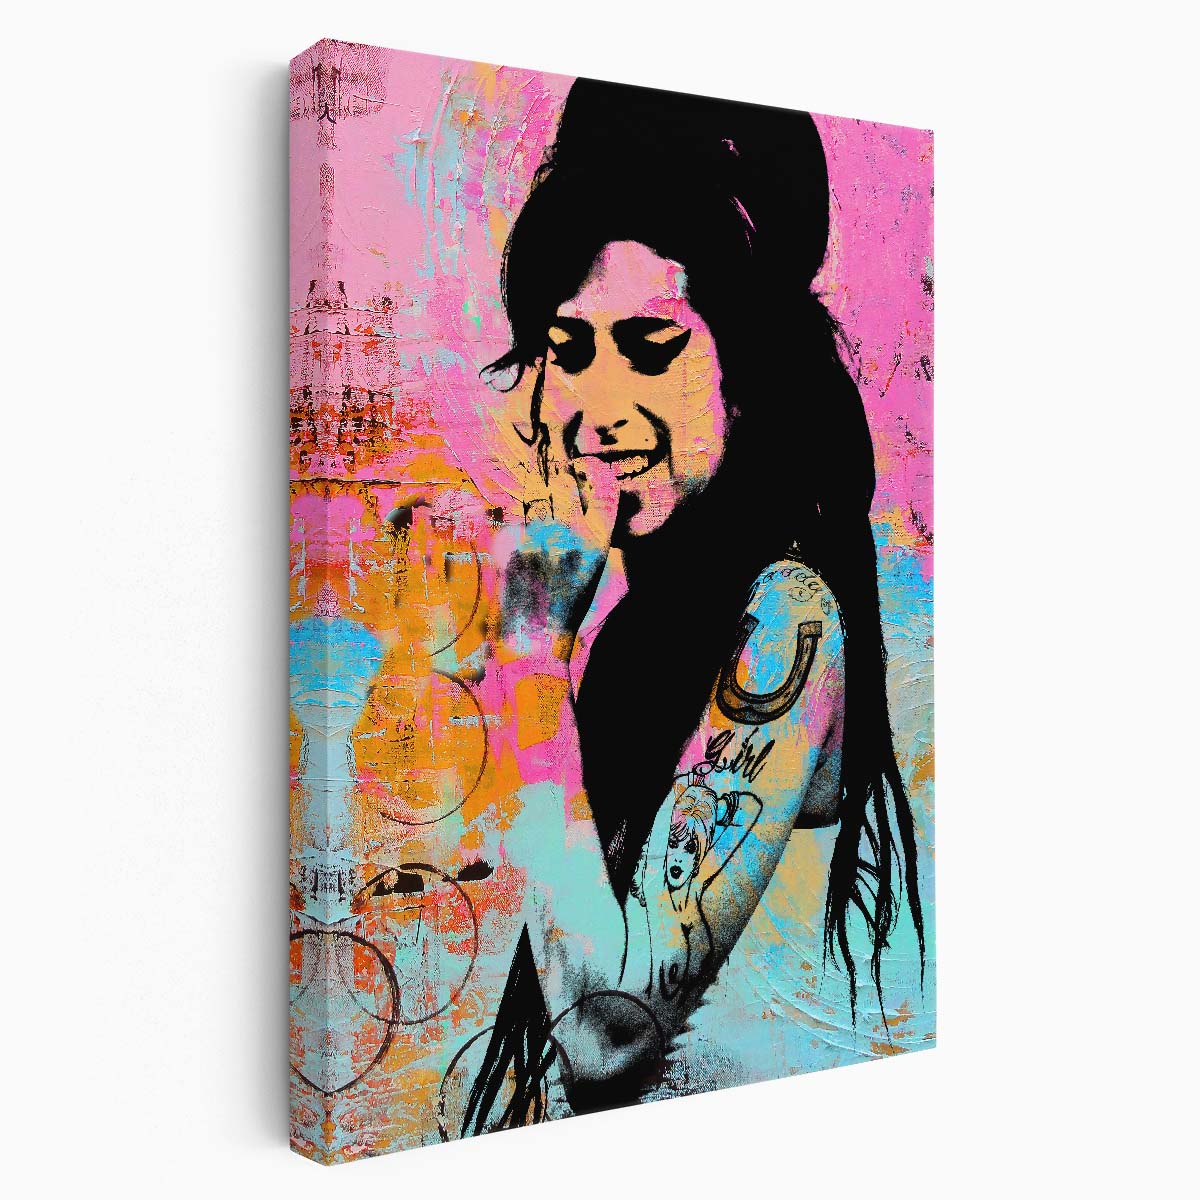 Amy Winehouse Circle Graffiti Wall Art by Luxuriance Designs. Made in USA.